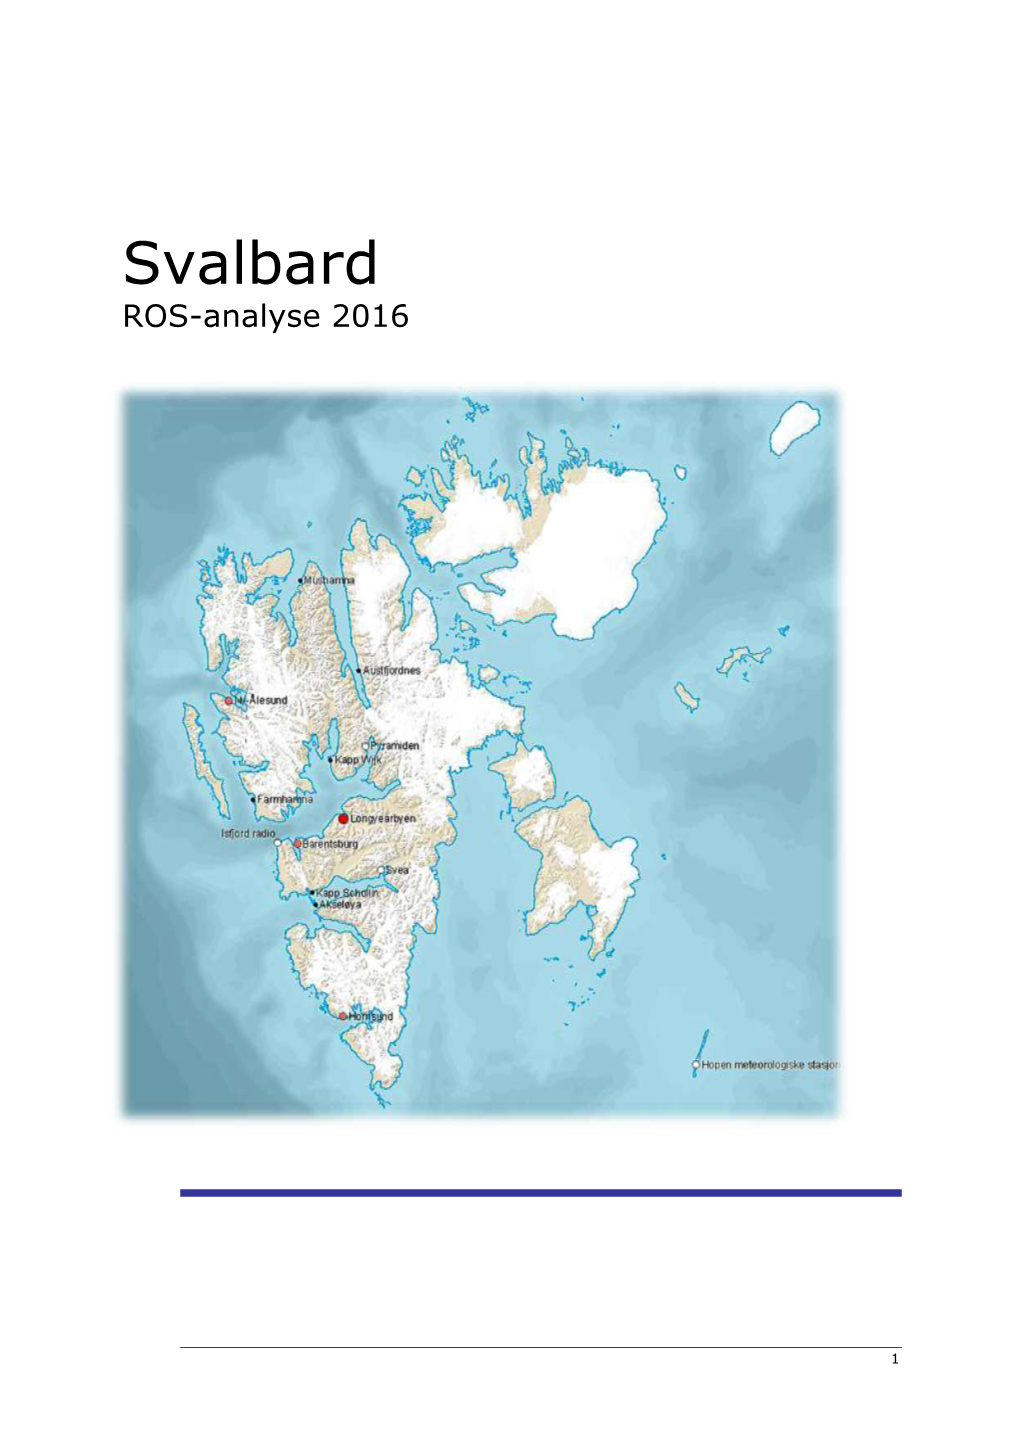 ROS-Analyse Svalbard